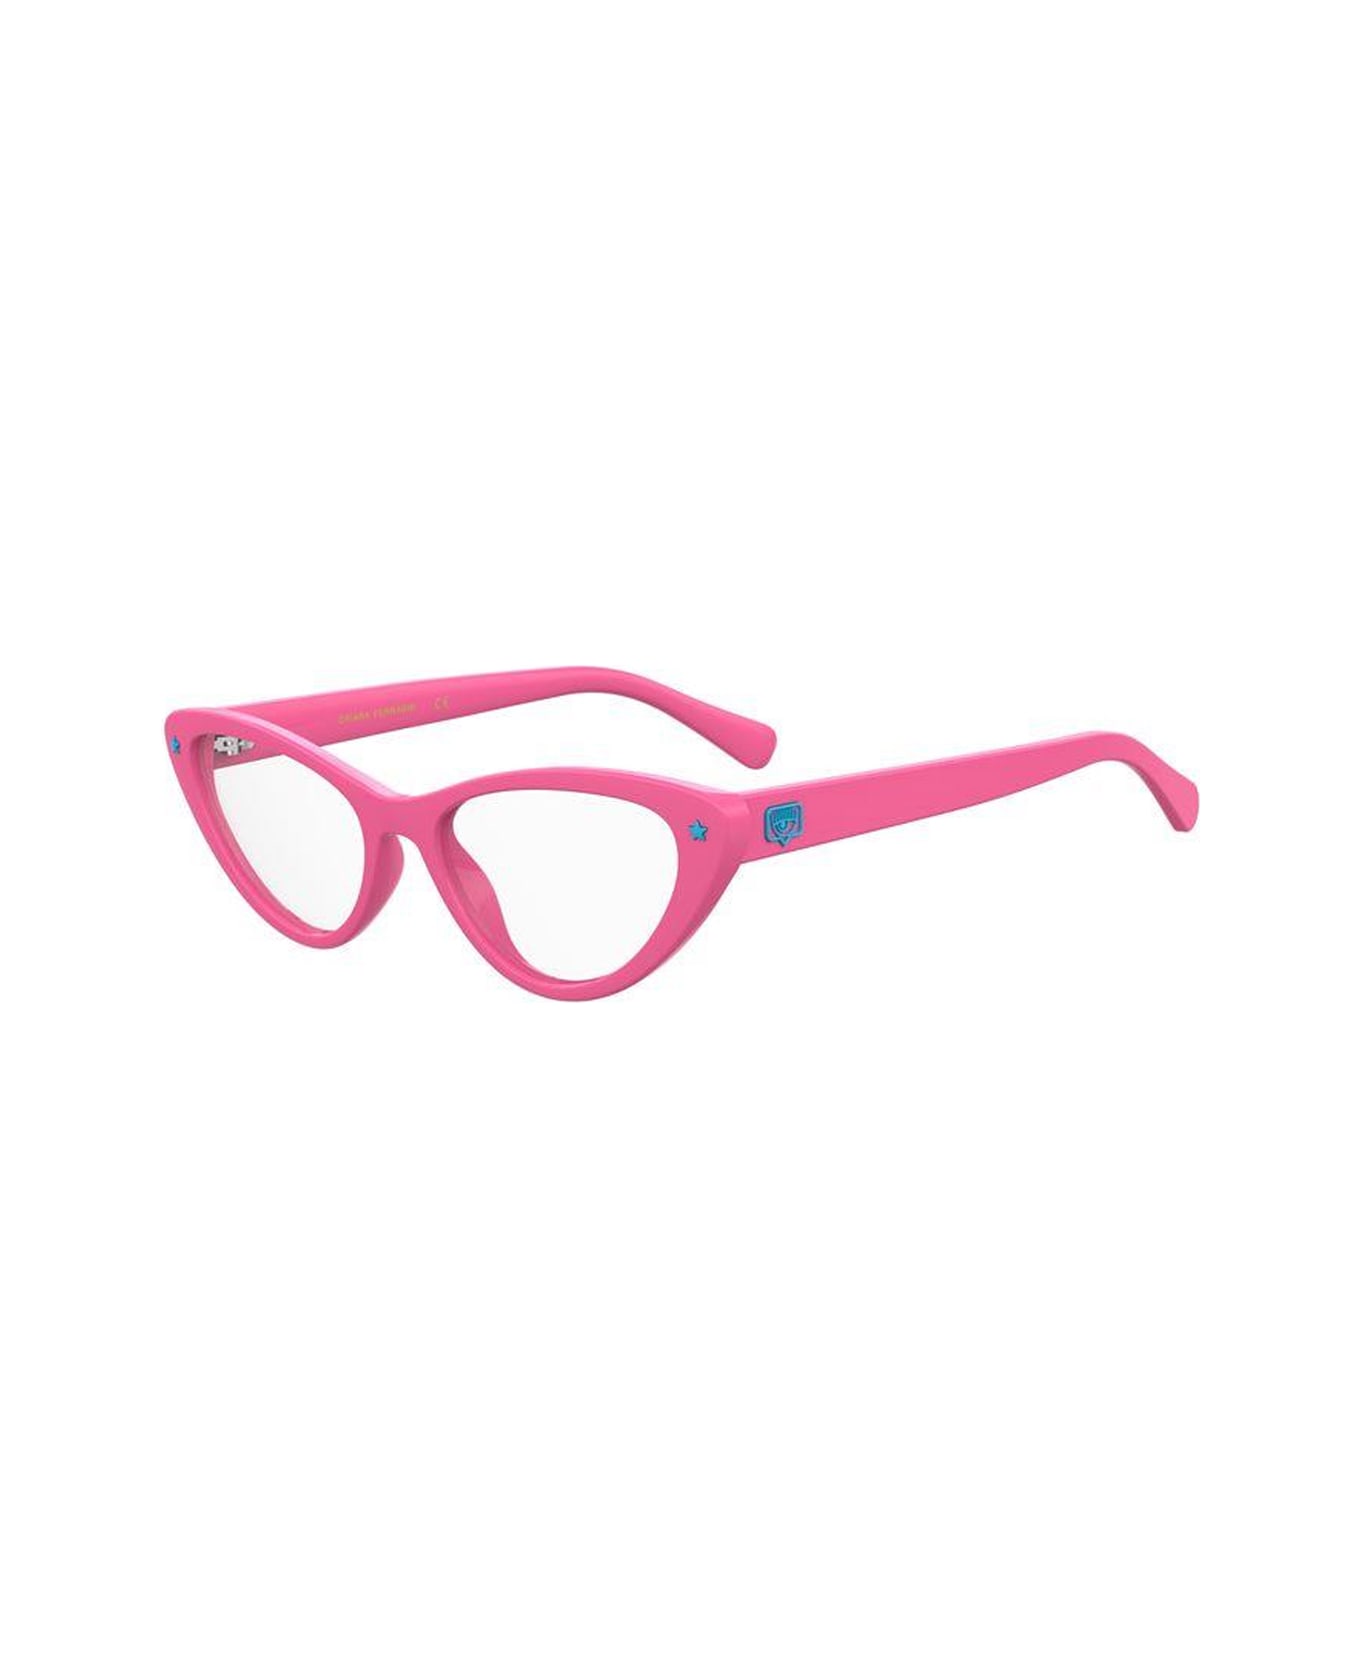 Chiara Ferragni Cf 7012 Pink Glasses - Rosa